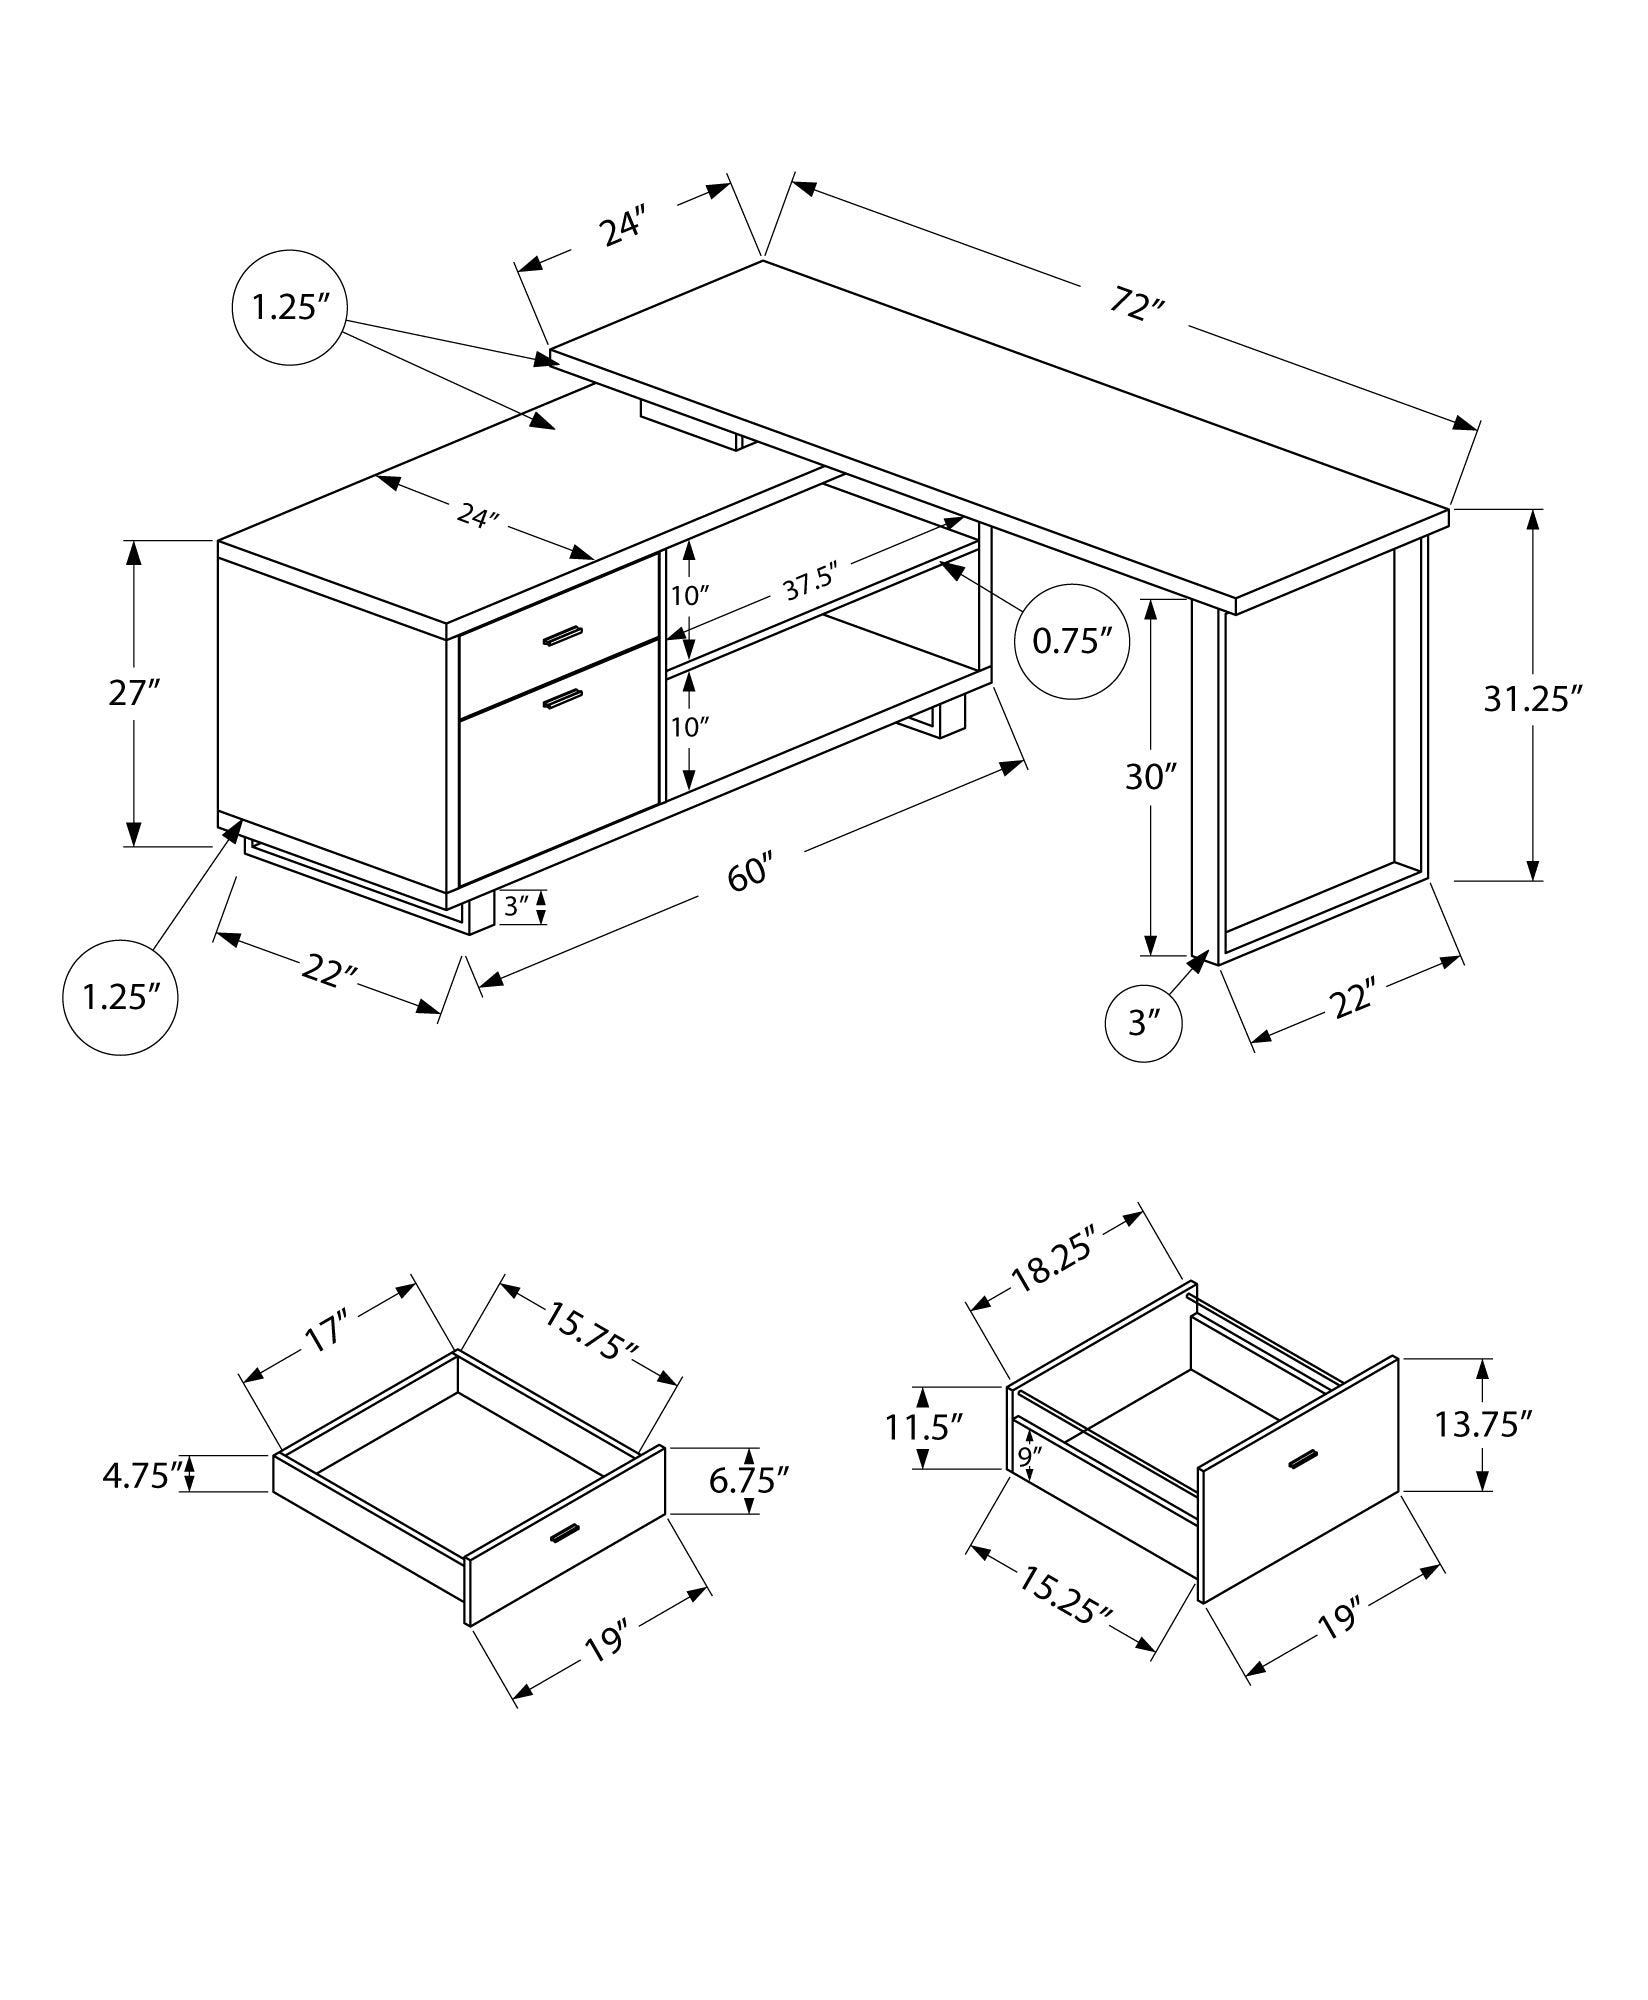 MN-897712    Computer Desk - L-Shaped / Corner / 2 Drawers / Metal Legs / Reversible - 72"L X 60"W - Light Reclaimed Wood / Black